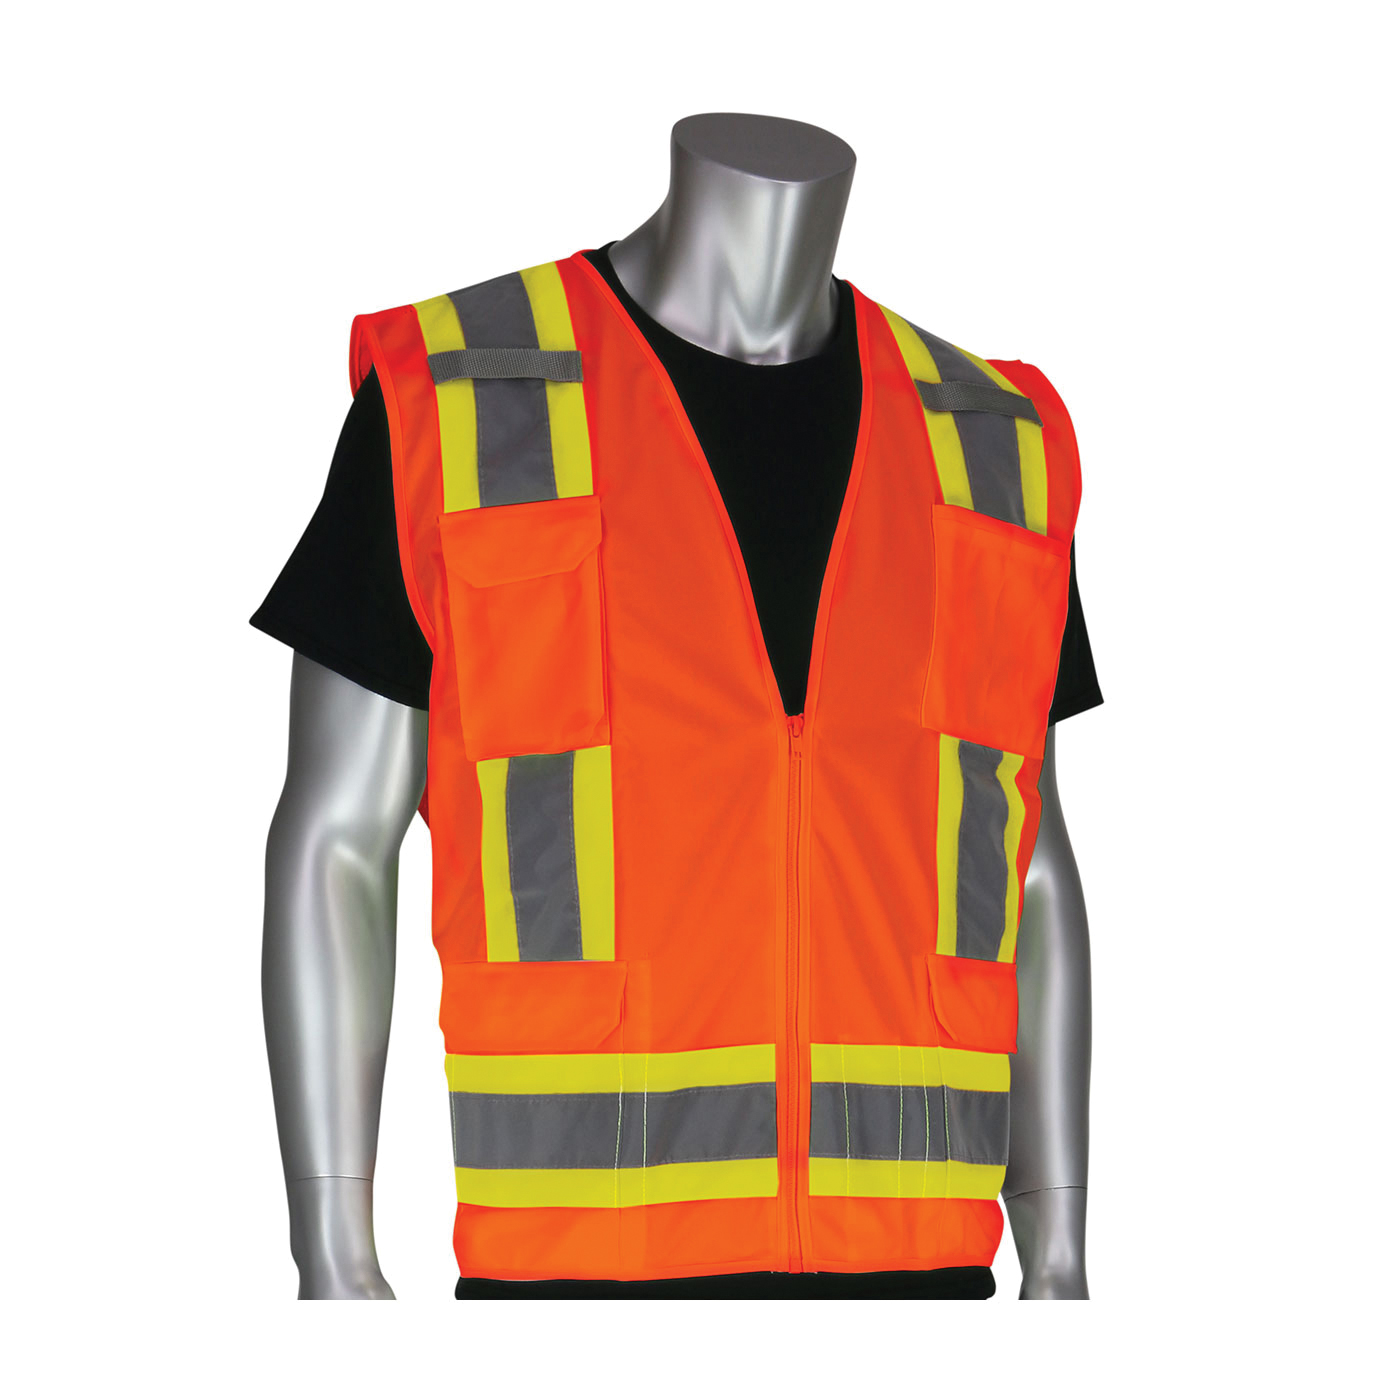 PIP® 302-0500S-ORG/4X 2-Tone Surveyor Safety Vest, 4XL, Hi-Viz Orange, Polyester/Solid Tricot, Zipper Closure, 11 Pockets, ANSI Class: Class 2, Specifications Met: ANSI 107 Type R